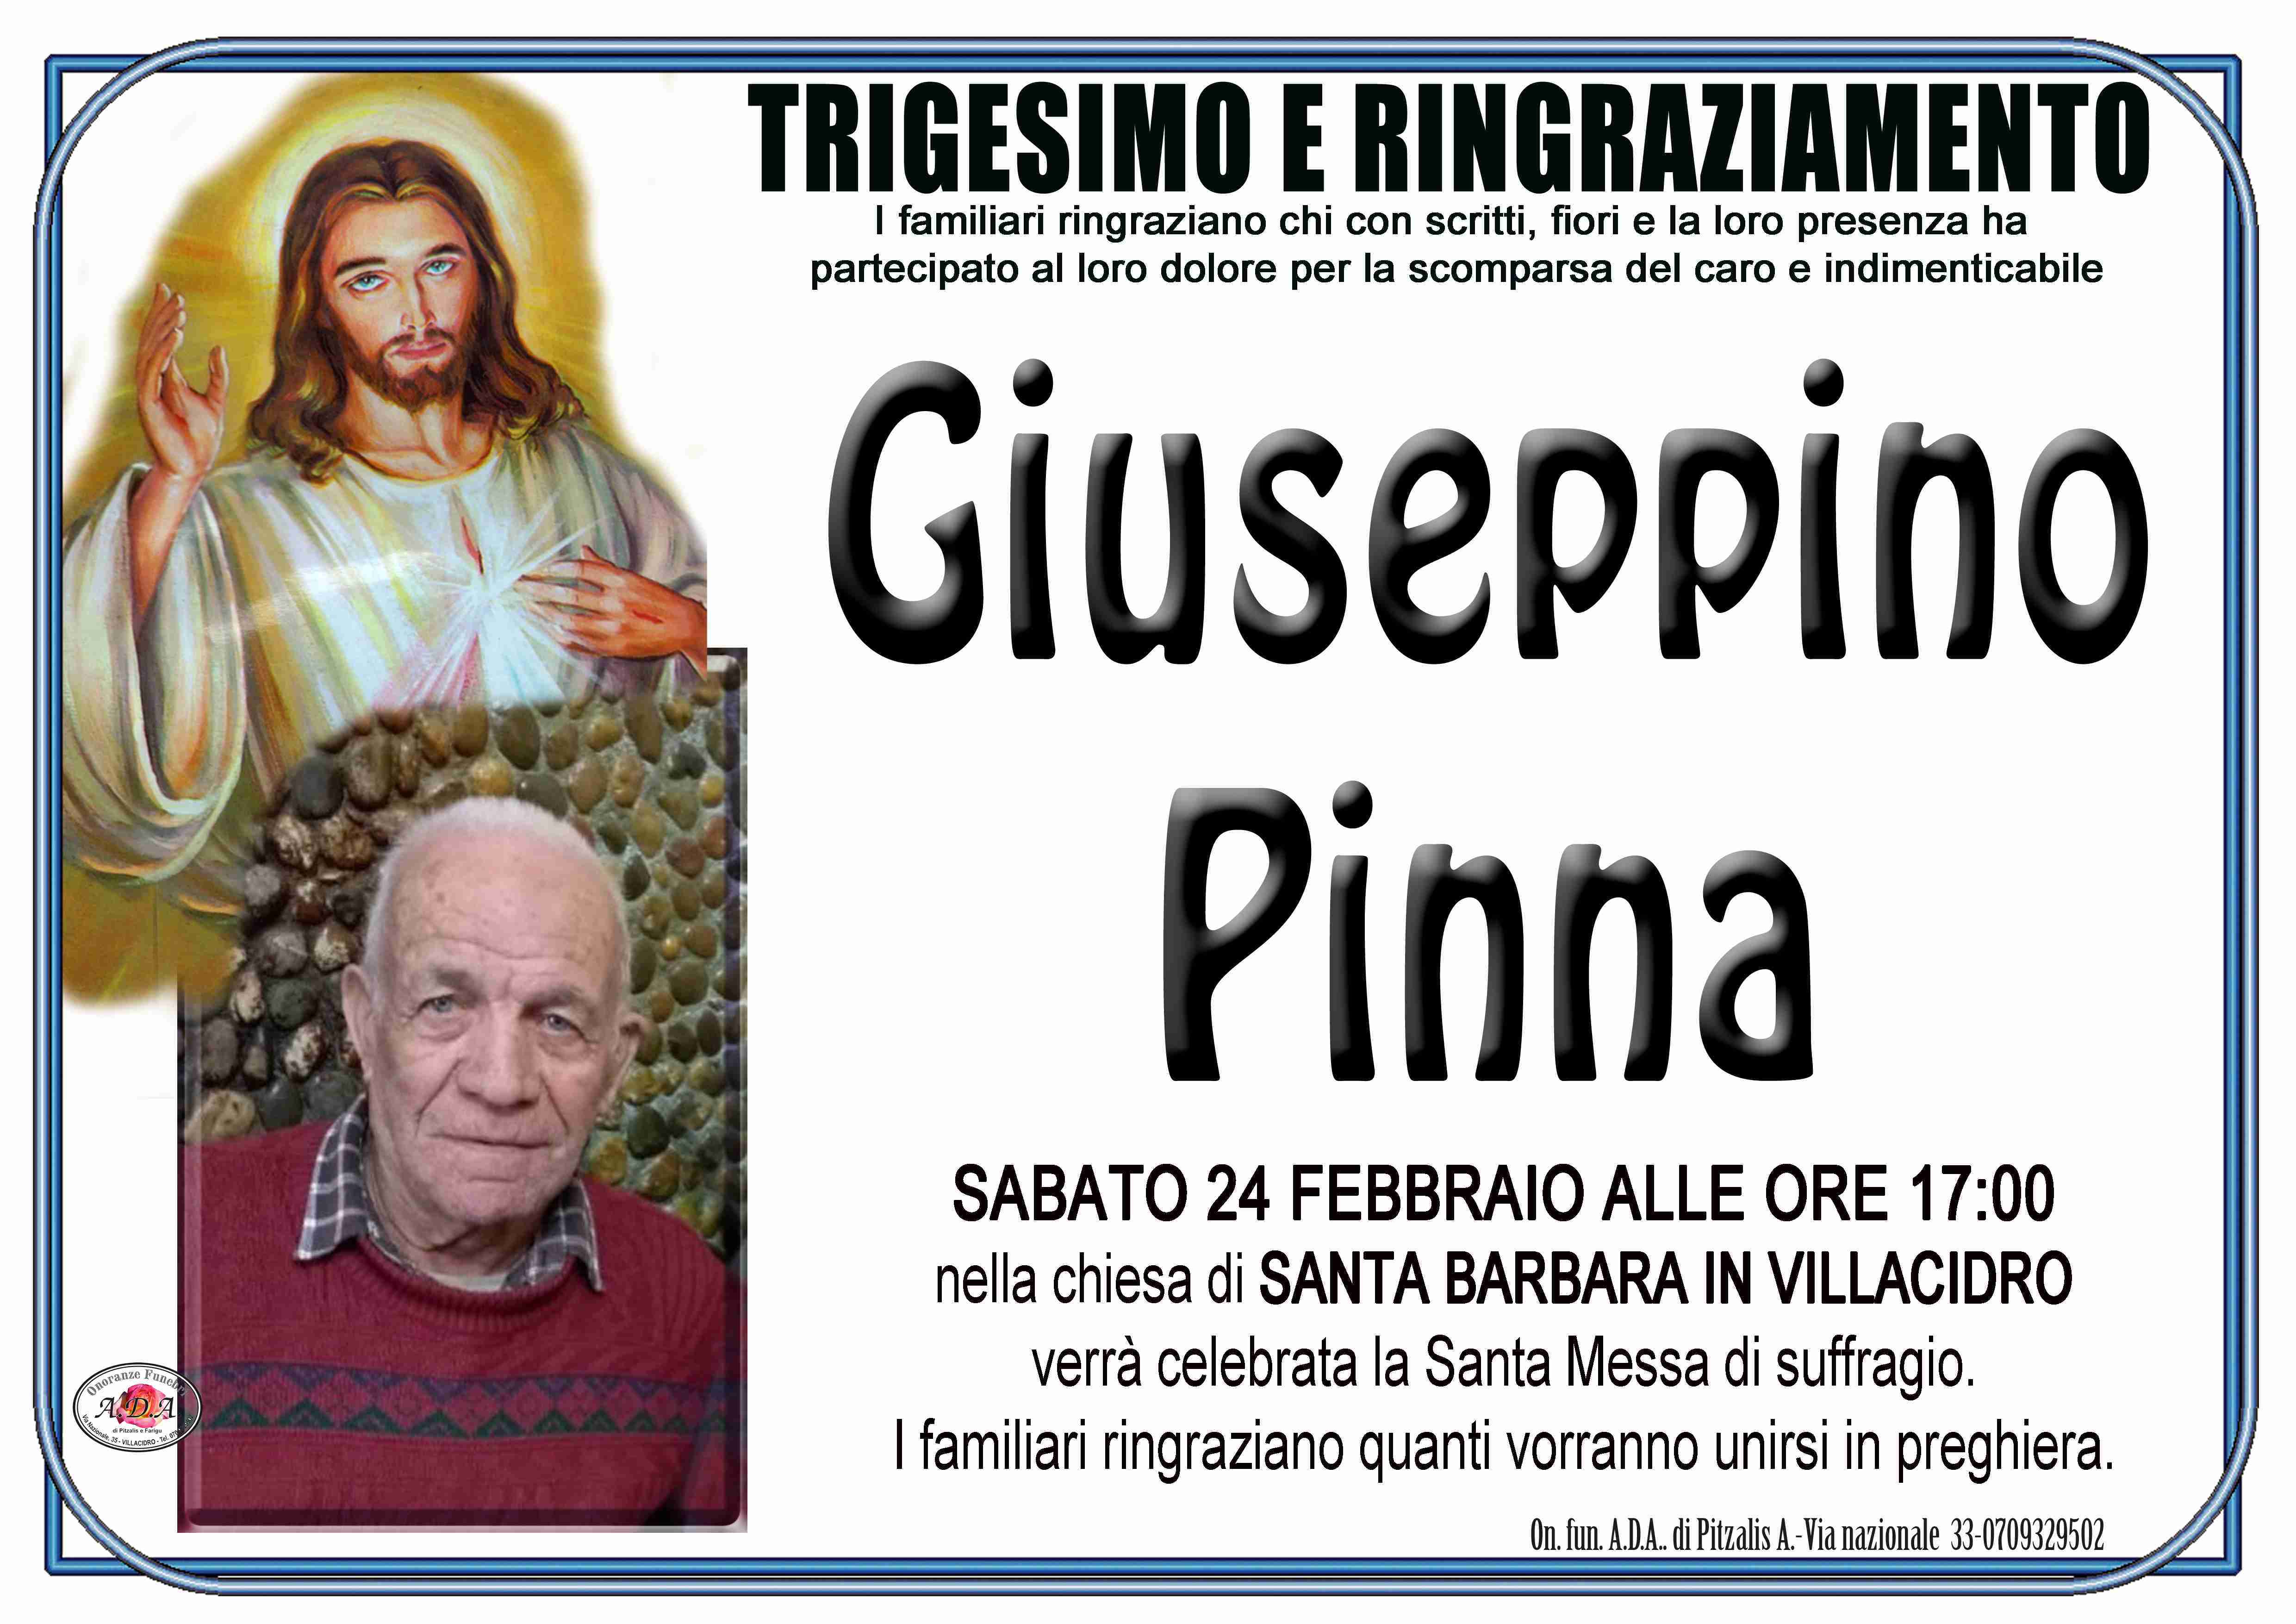 Giuseppino Pinna